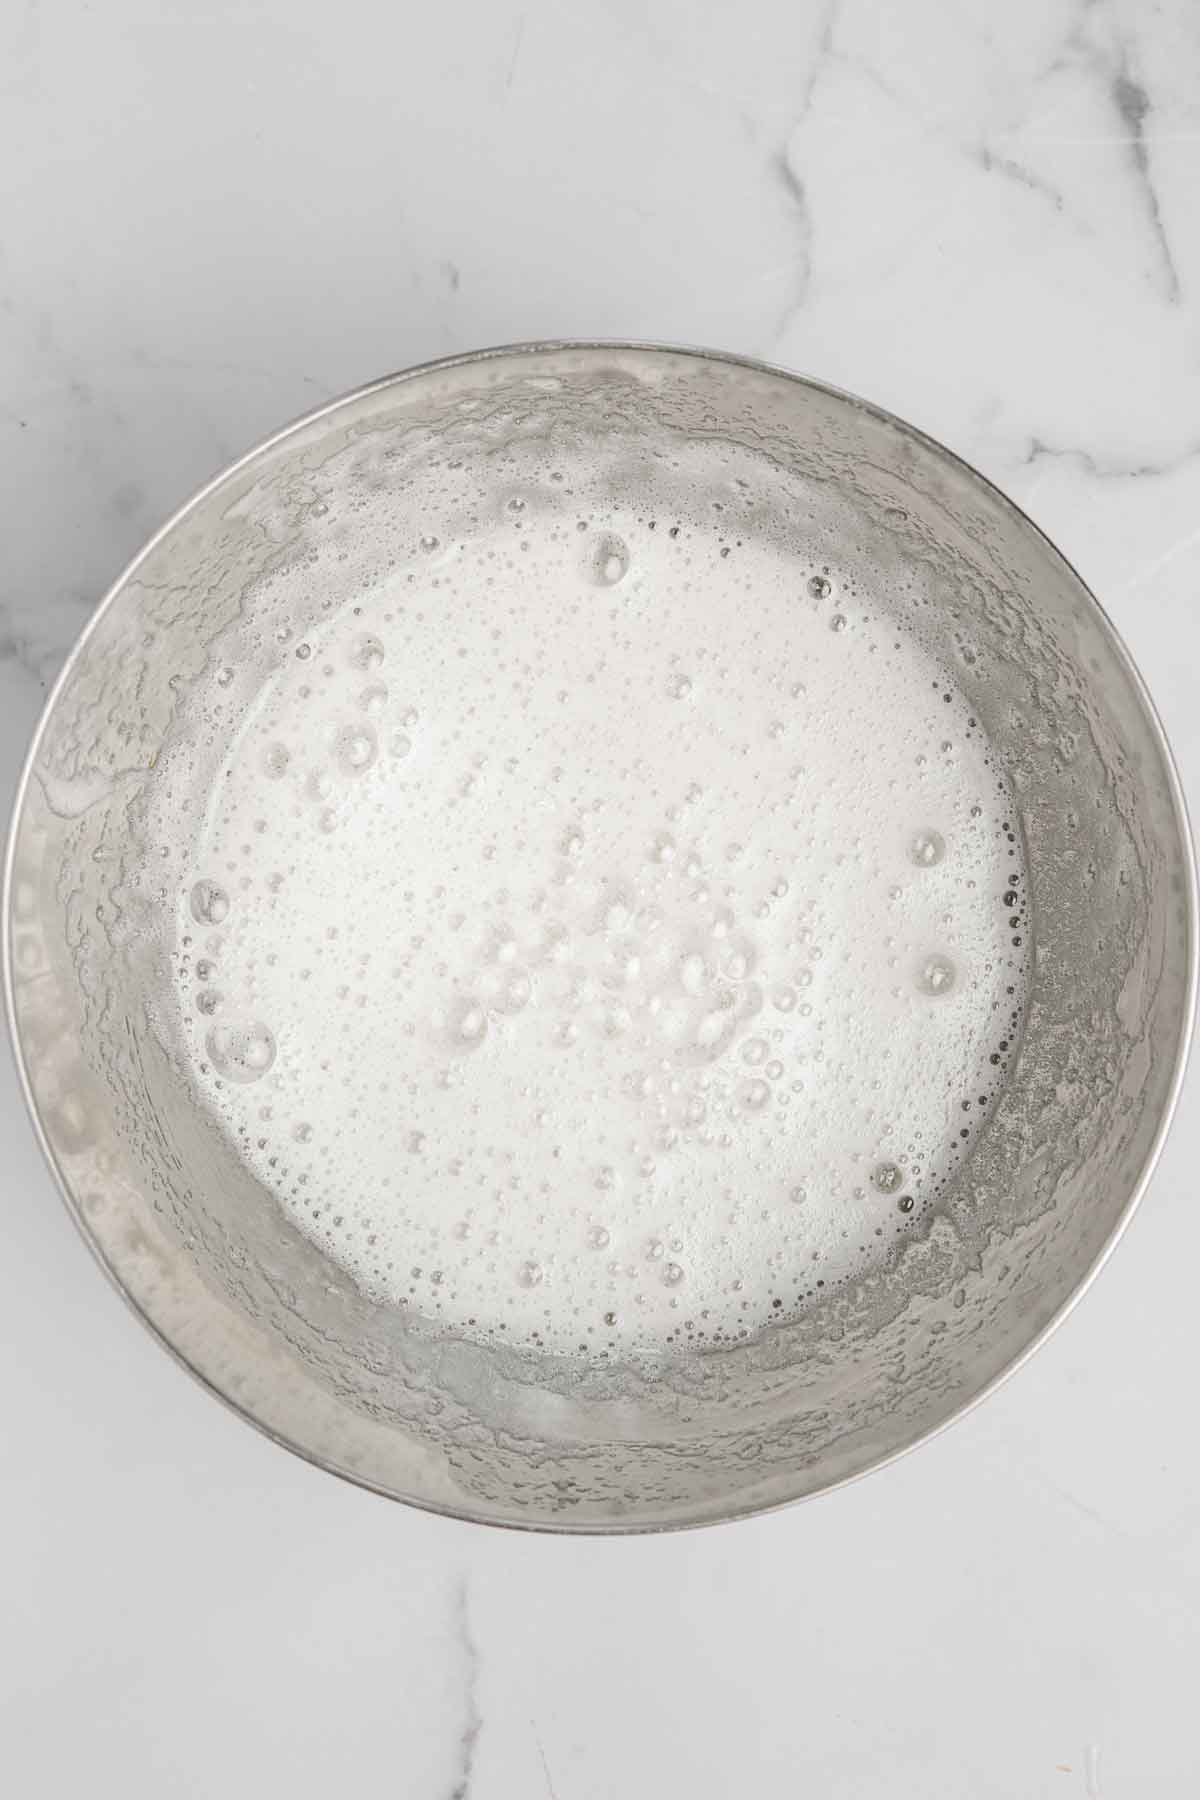 medium bowl with egg white mixture